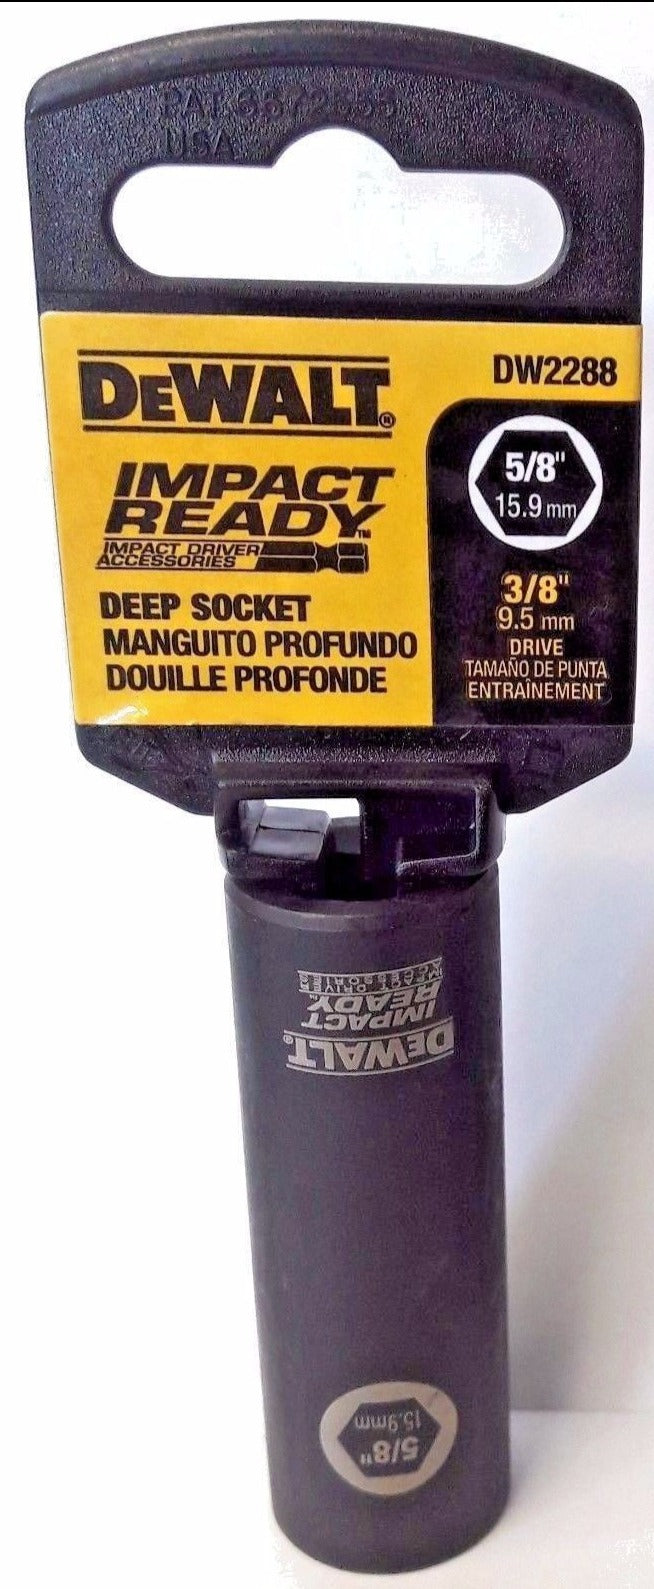 Dewalt DW2288 Impact Ready Deep Socket 5/8" 3/8 Drive